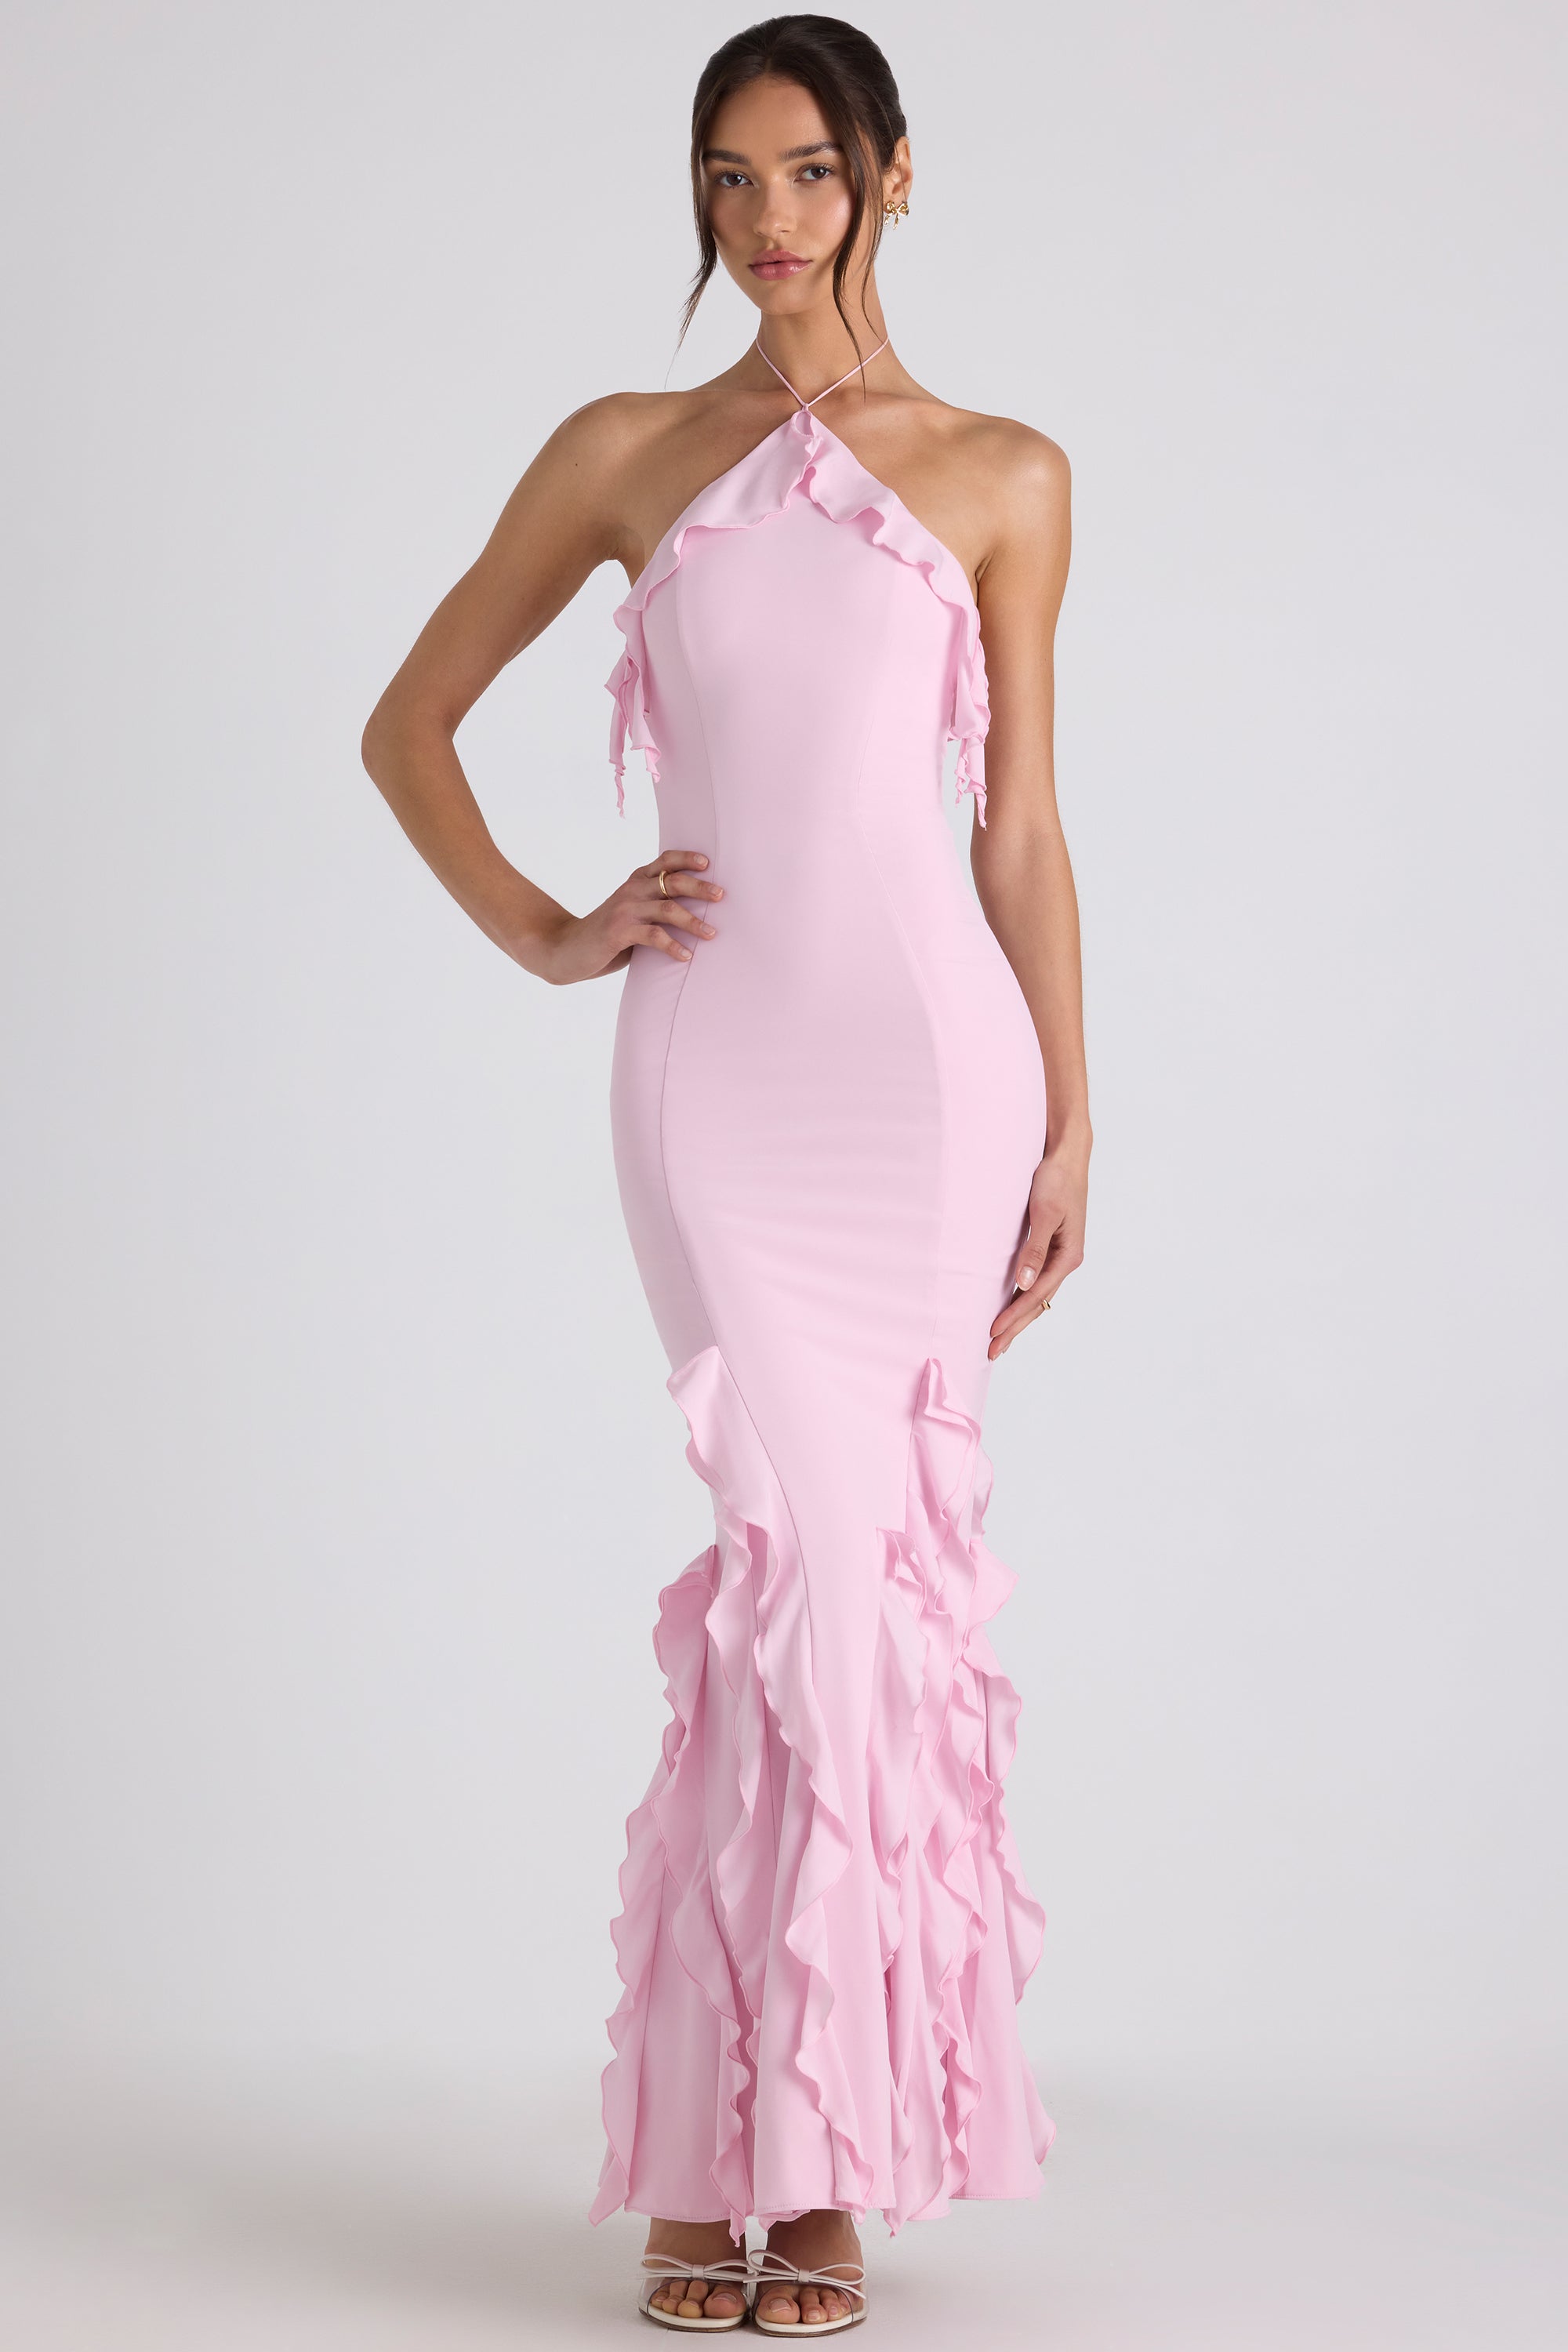 New Ankara Maxi Dress for Ladies | Stunning African Dresses | Asoebi Long  Ankara Flowing Gowns - YouTube